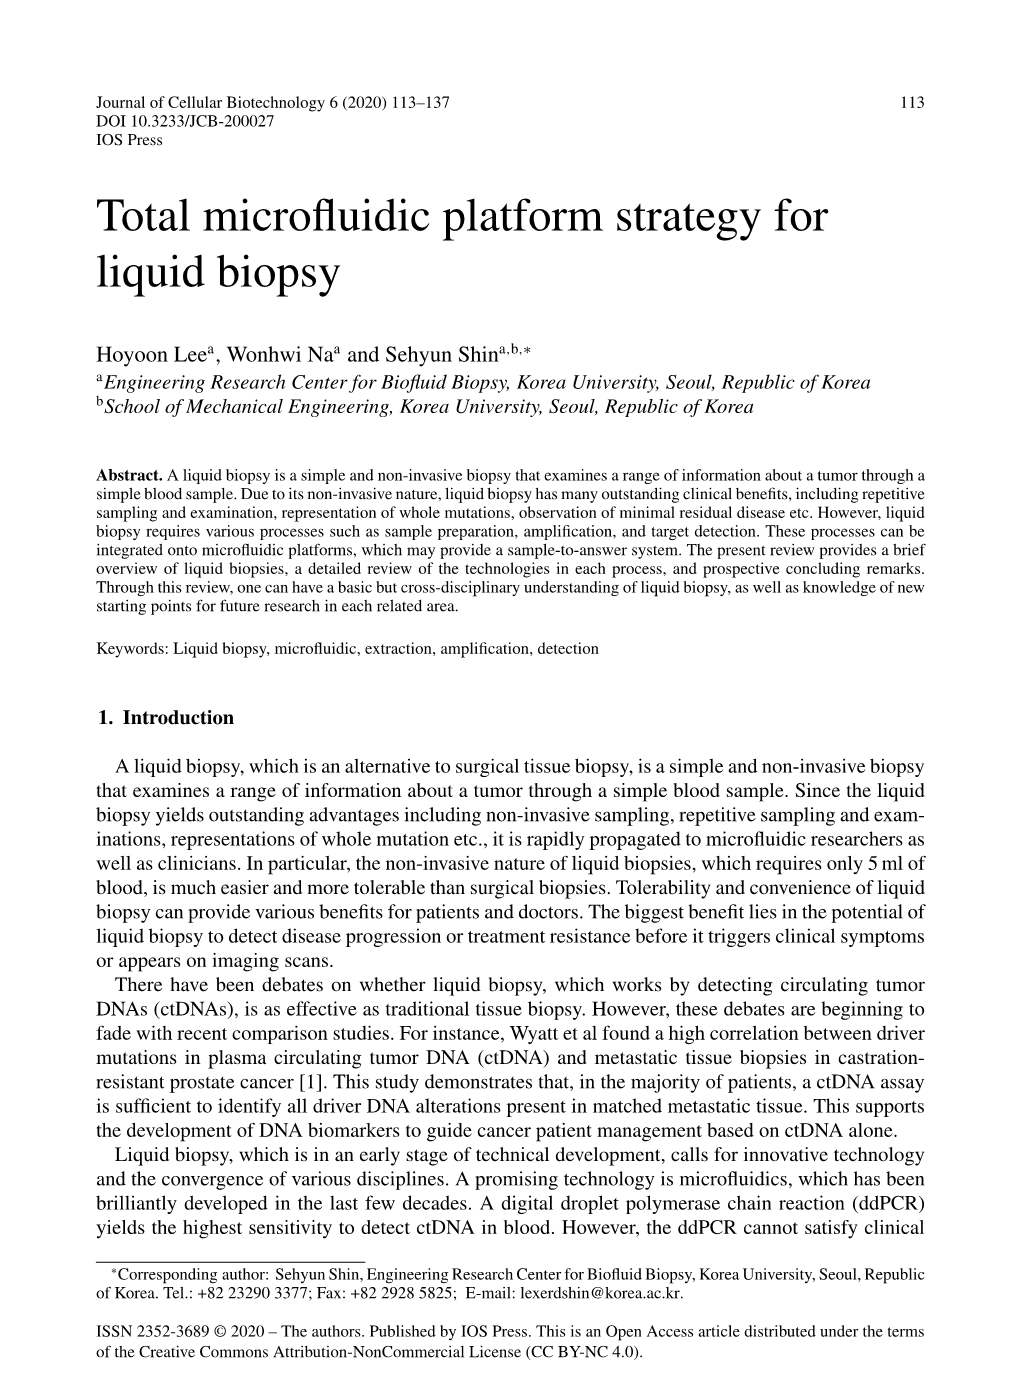 Total Microfluidic Platform Strategy for Liquid Biopsy